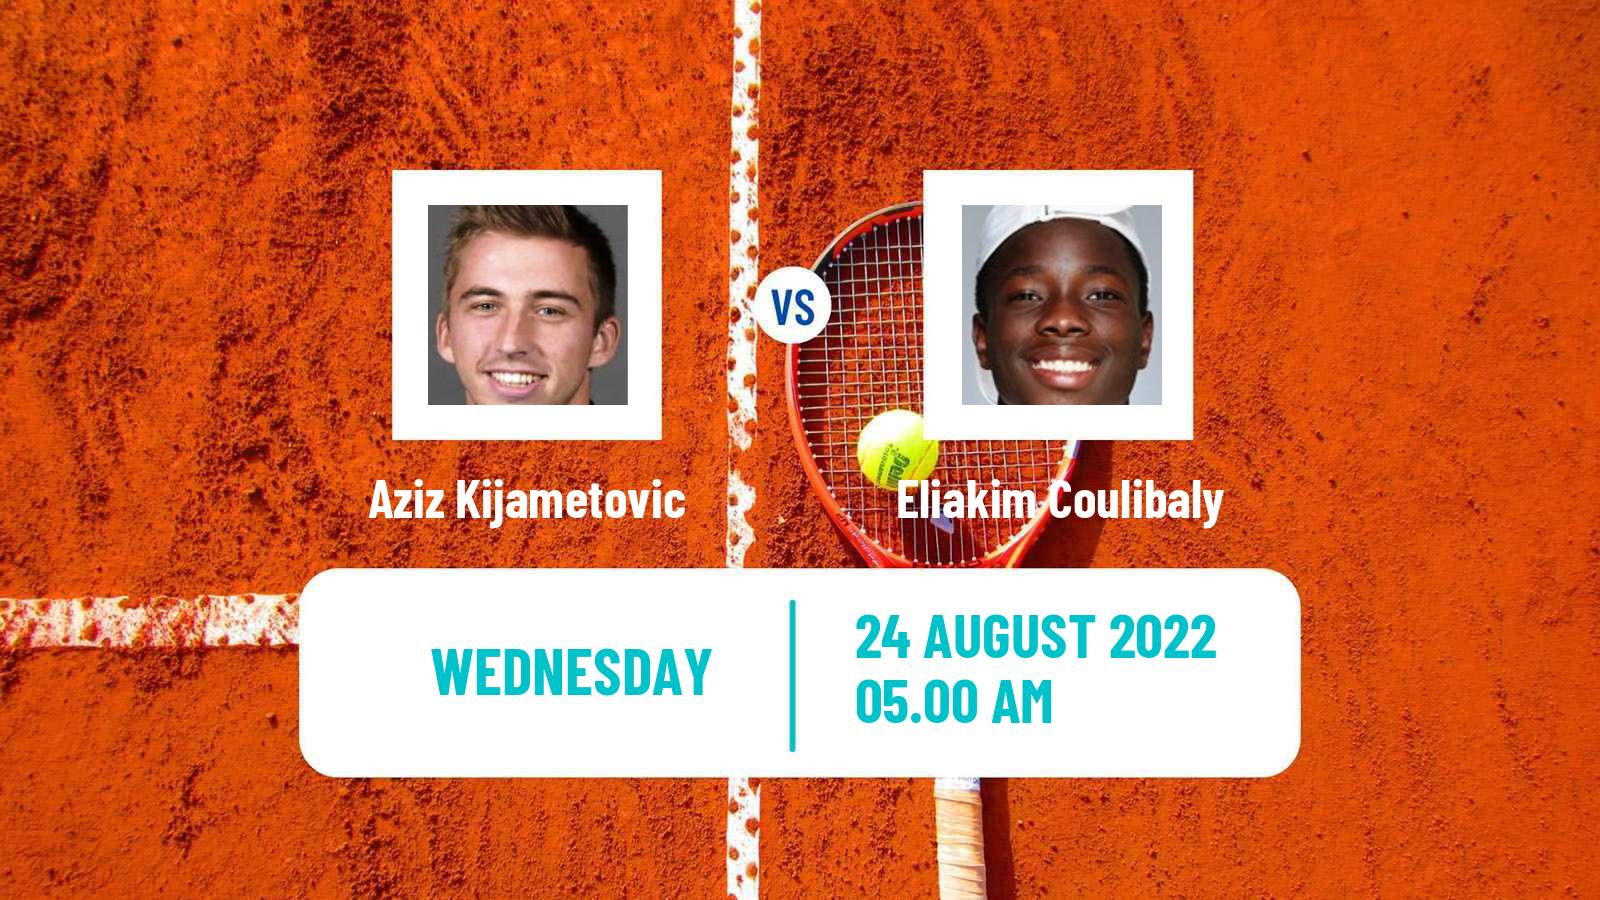 Tennis ITF Tournaments Aziz Kijametovic - Eliakim Coulibaly